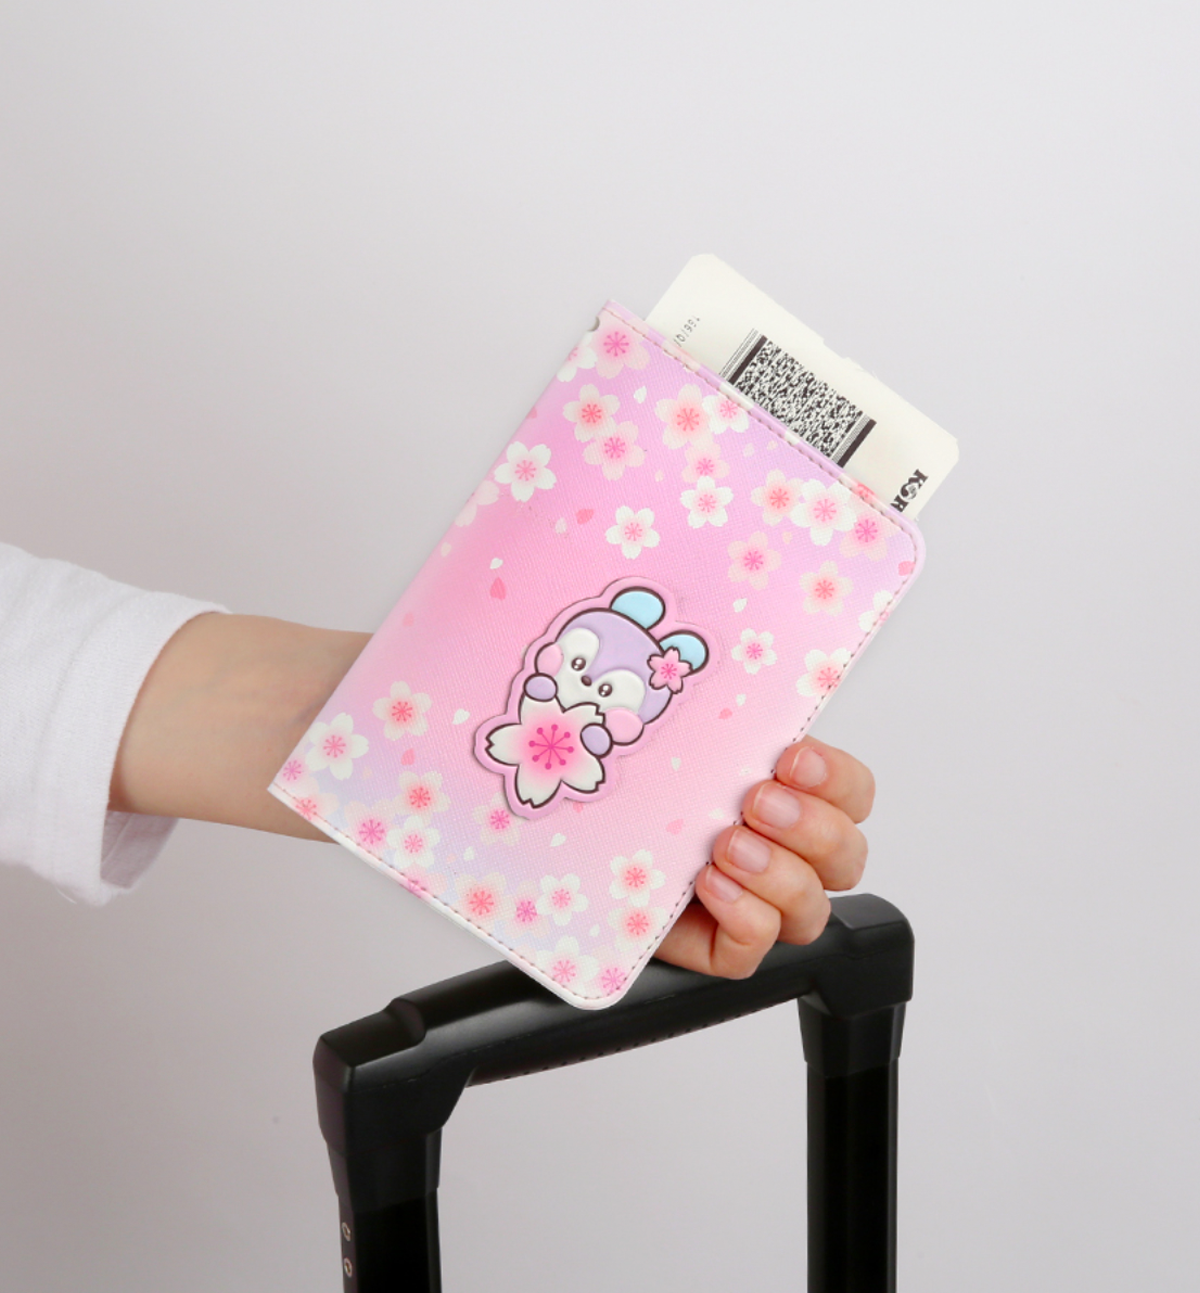 BT21 Cherry Blossom Passport Cover [Cooky]